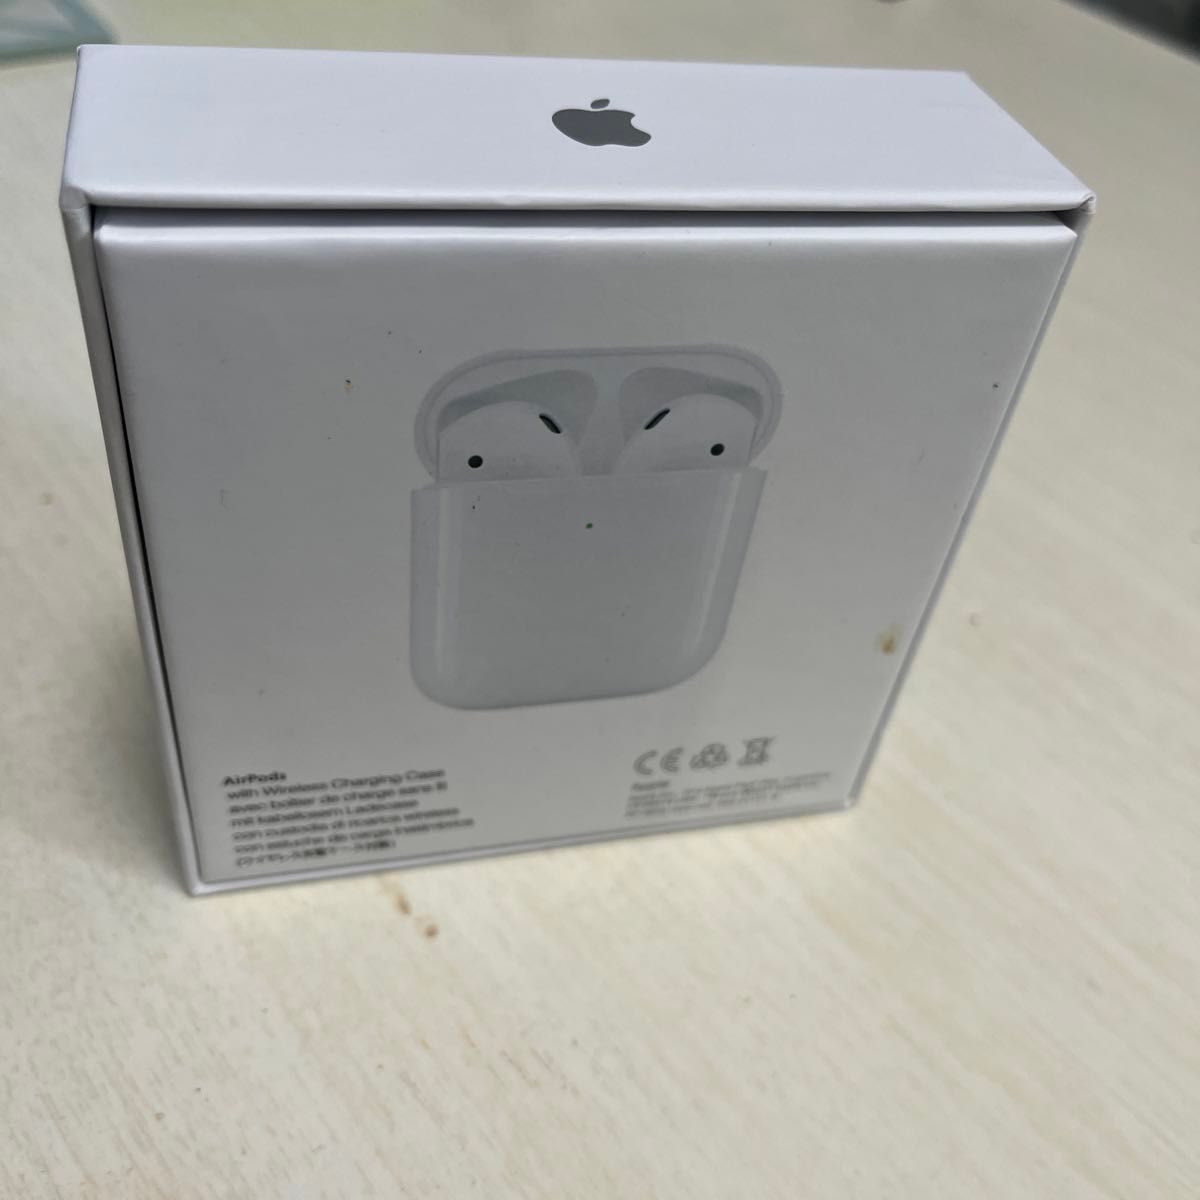 AirPods Apple ワイヤレスイヤホン Case 空箱